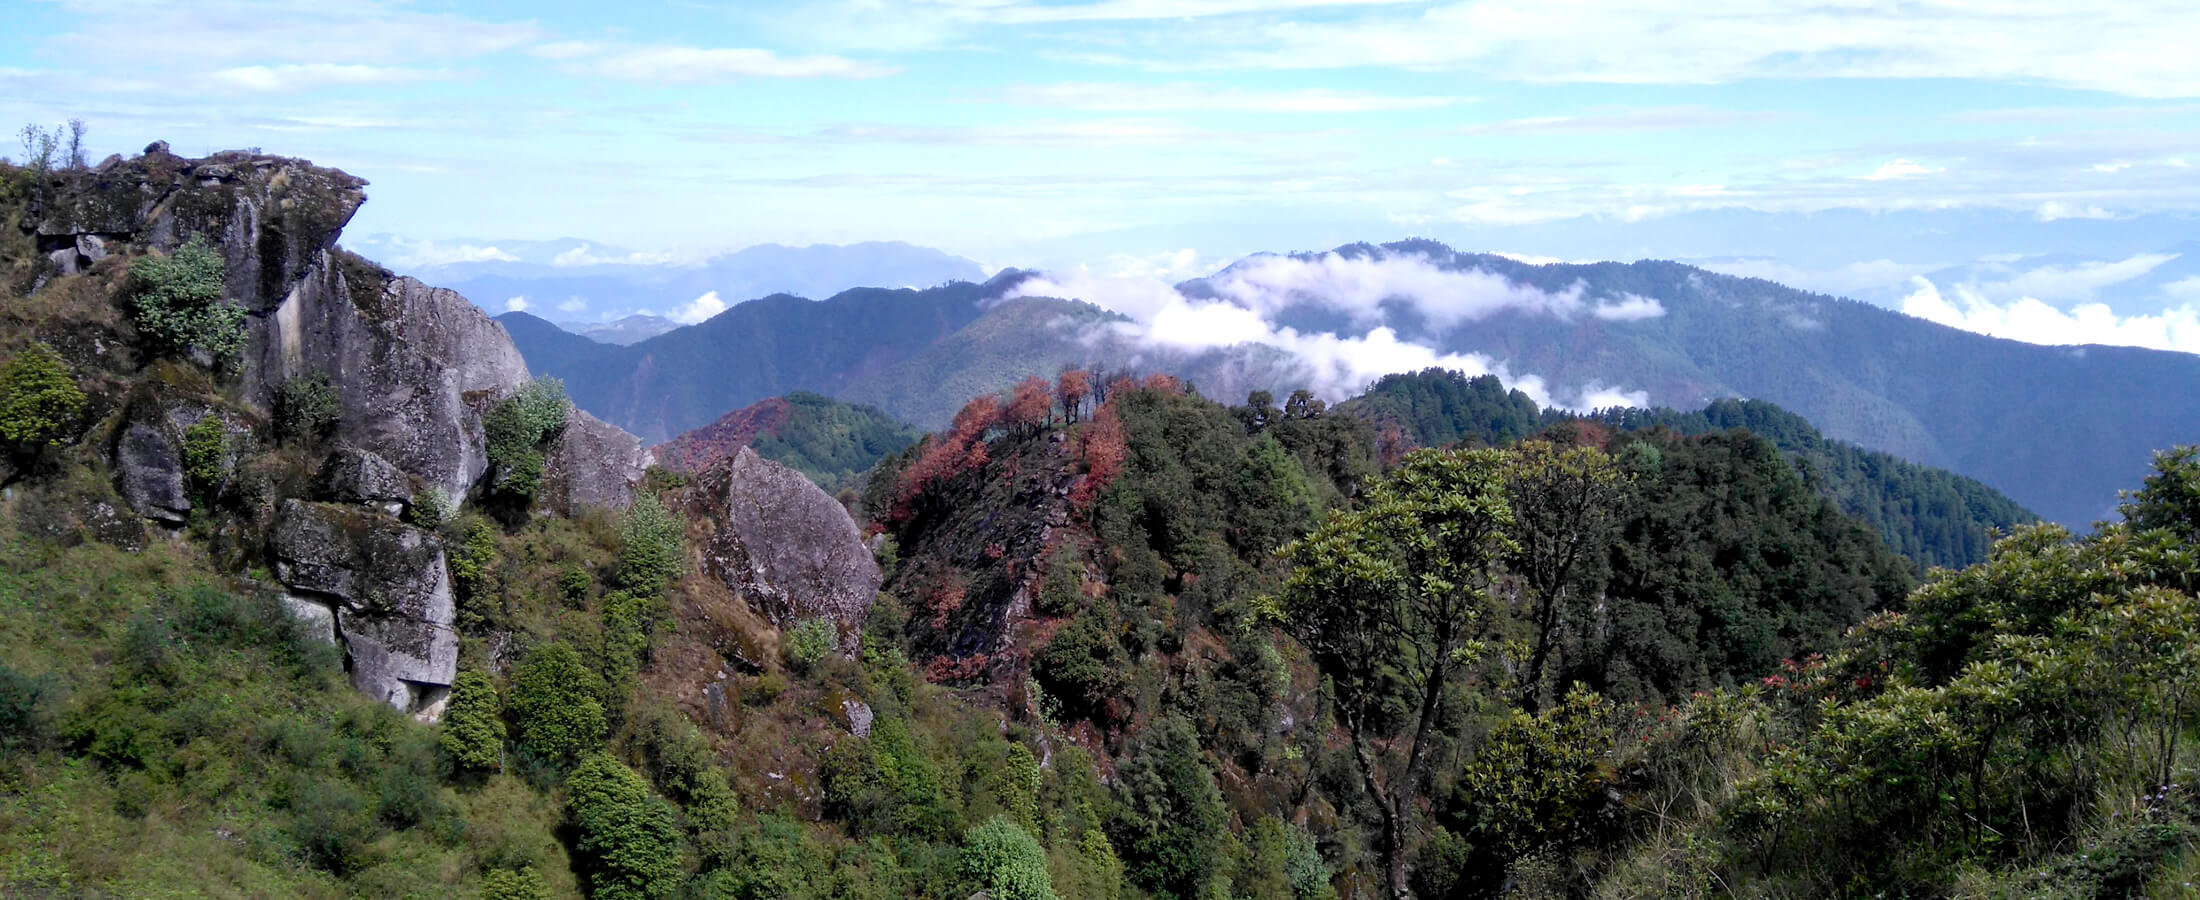 Beautiful Hills With Fog Bethanchok, Dhunkharka, Kavre, Nepal-bethanchowk.com